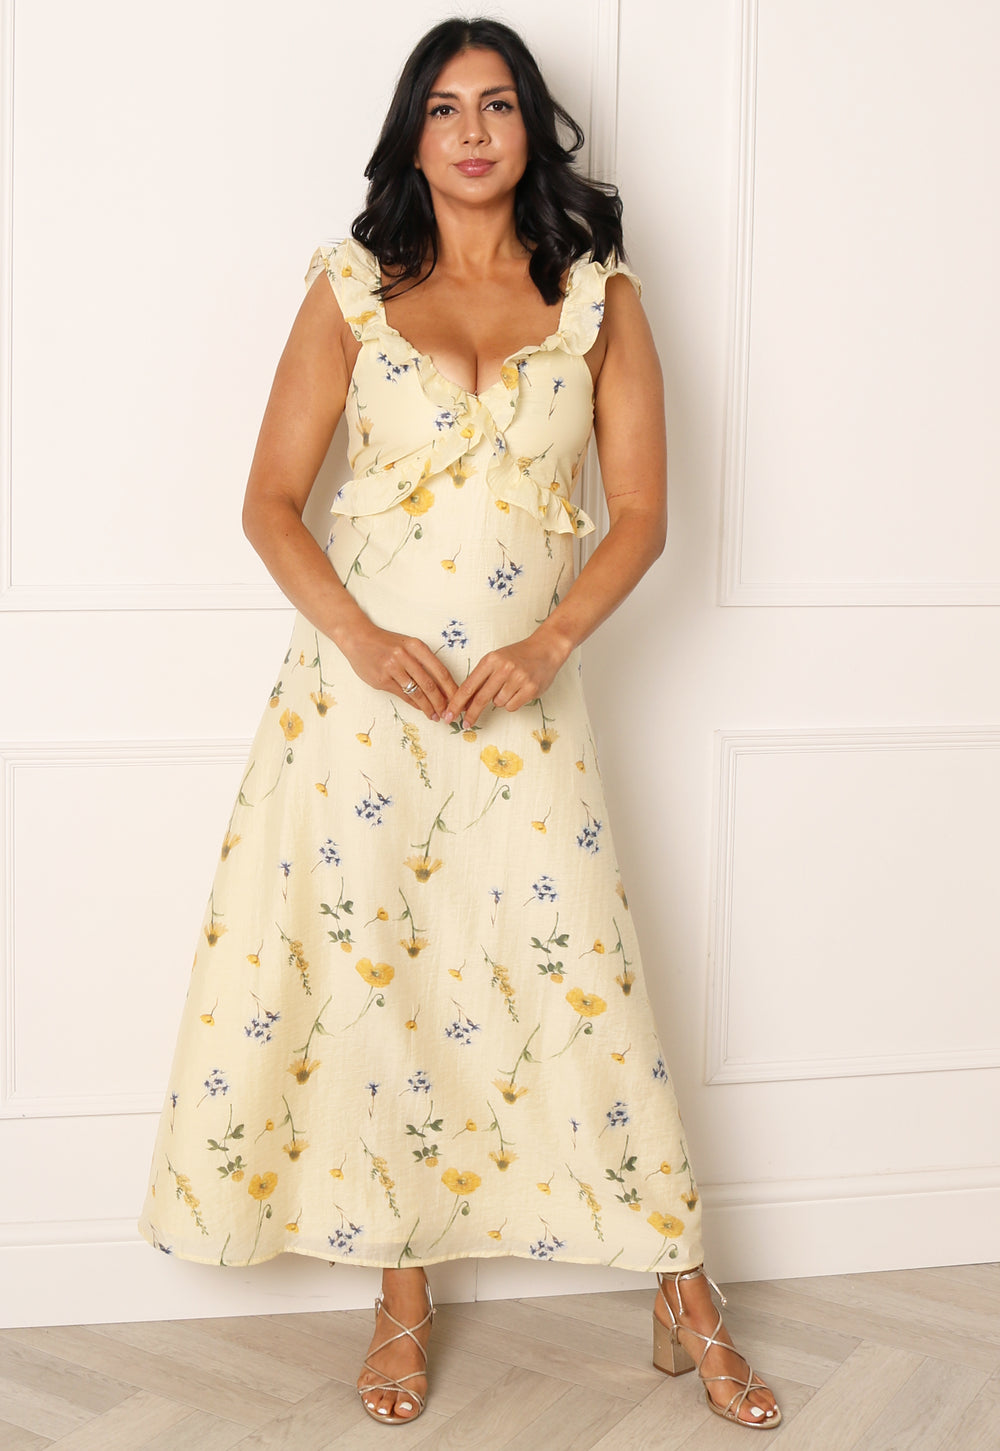 VERO MODA Backless Floral Frill Midi Dress in Lemon Yellow | One Nation Clothing VERO MODA Adeline Backless Frill Detail Midi in Lemon Yel